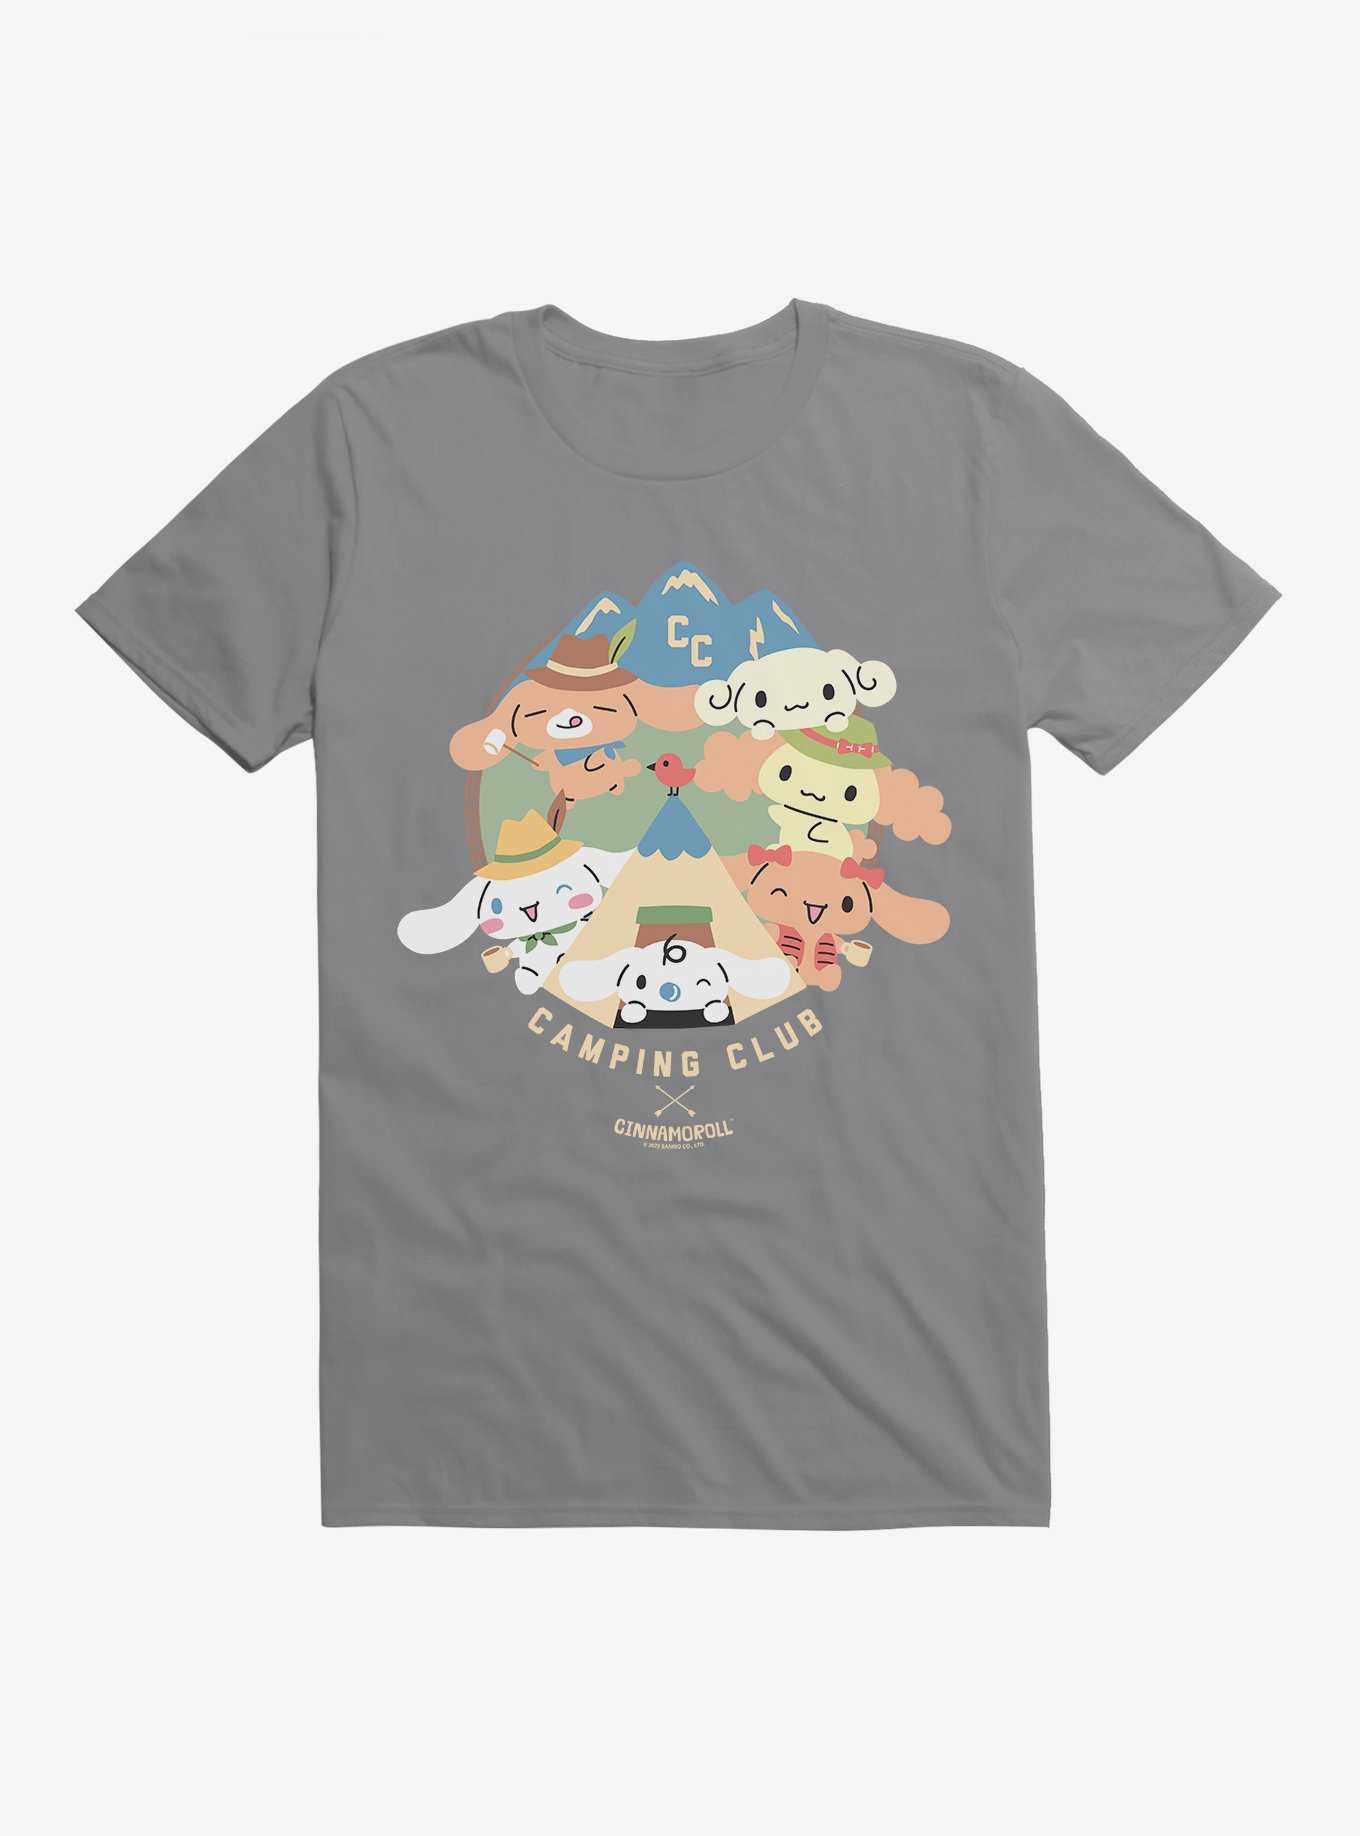 Cinnamoroll Camping Club T-Shirt, , hi-res